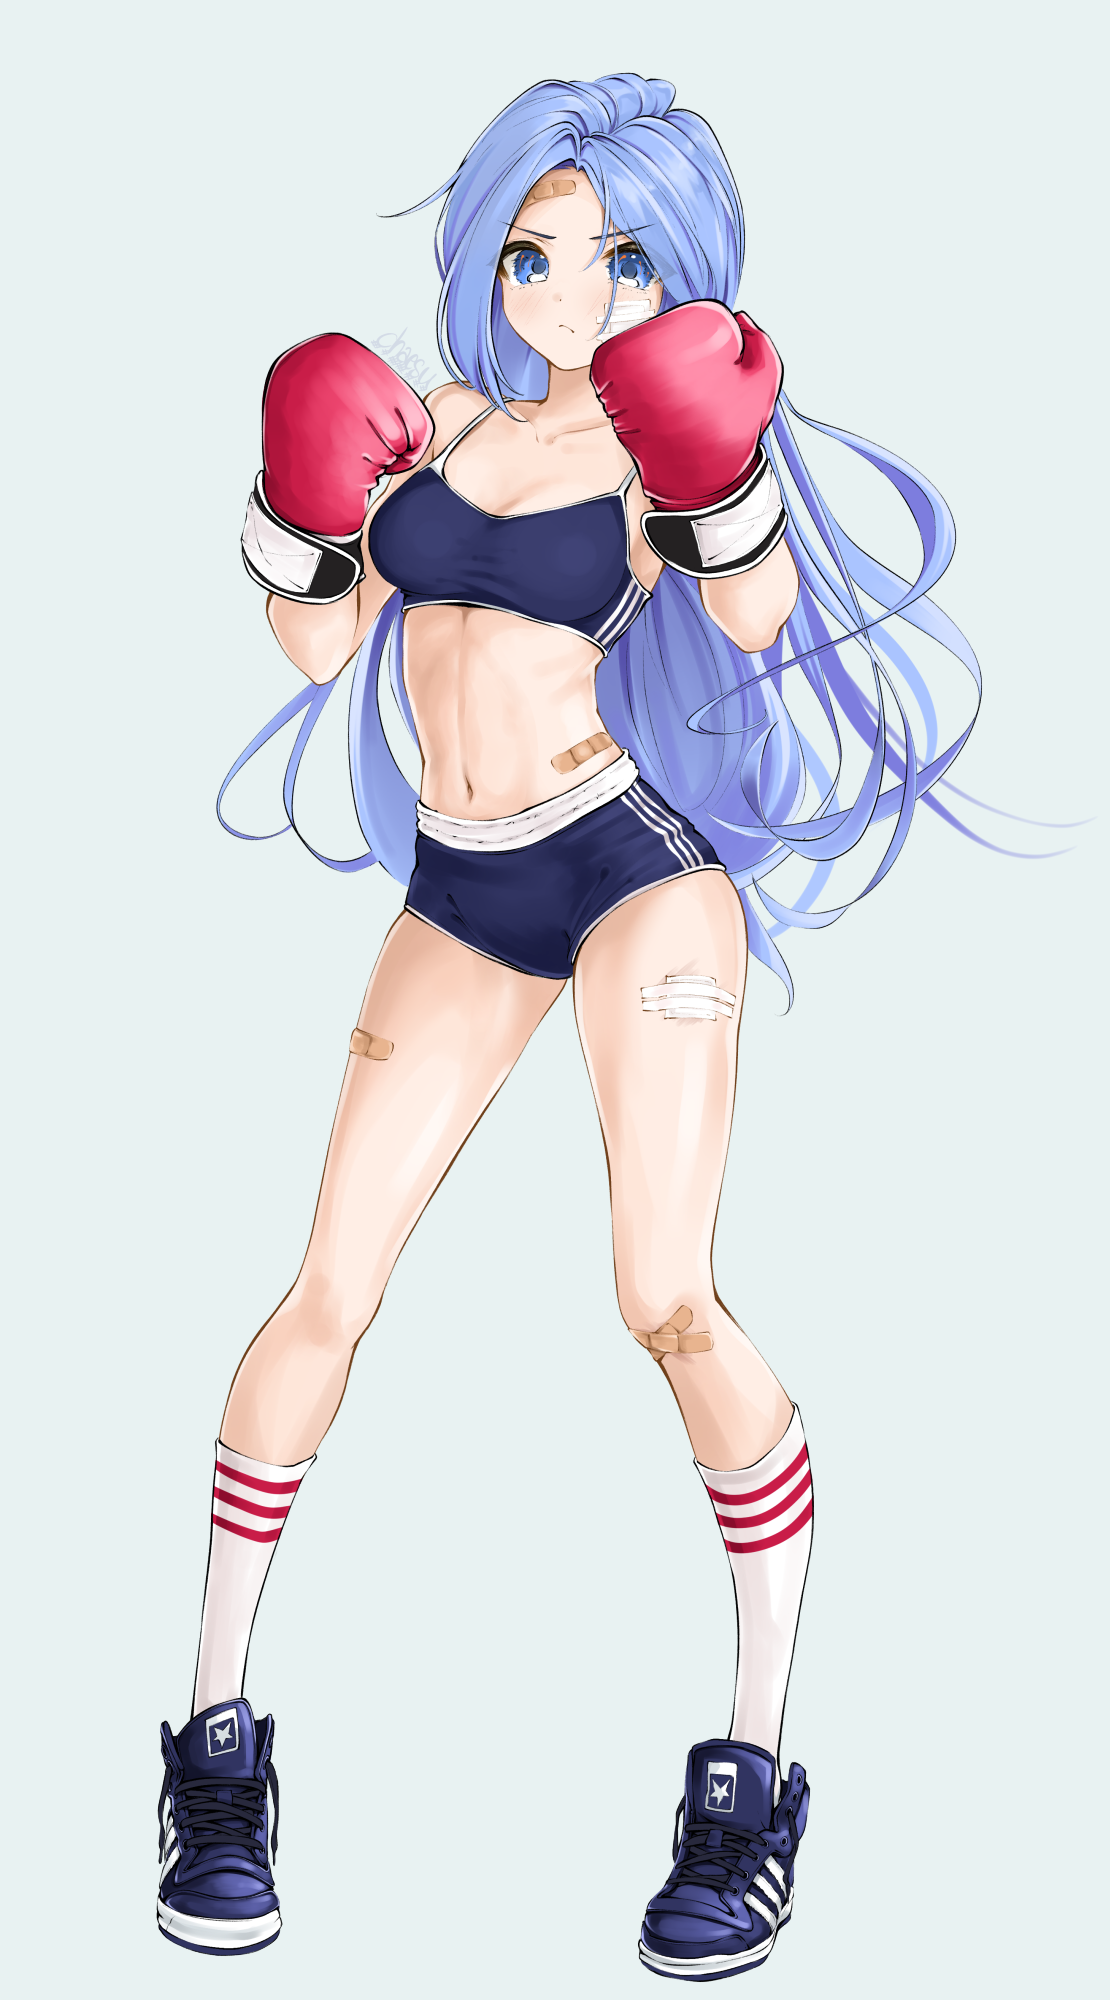 Anime 1110x2000 anime anime girls digital art artwork 2D portrait display gym clothes short shorts Band-Aid blue hair blue eyes sports bra boxing gloves Chaesu